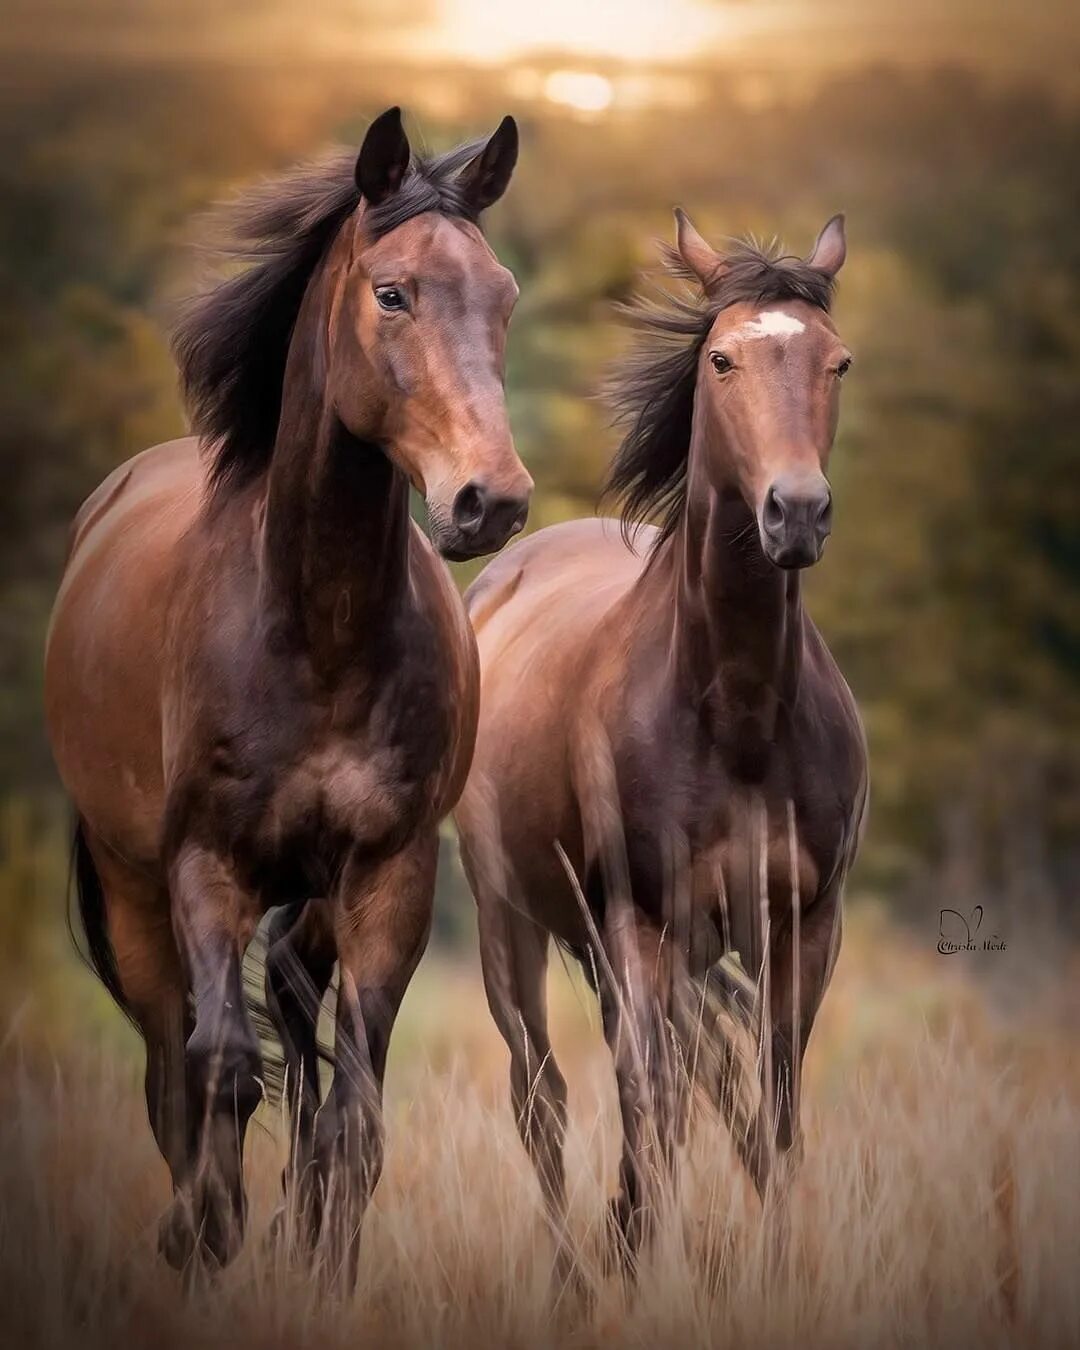 Horses are beautiful. Две лошади. Красивые лошади. Пара лошадей. Любовь лошадей.